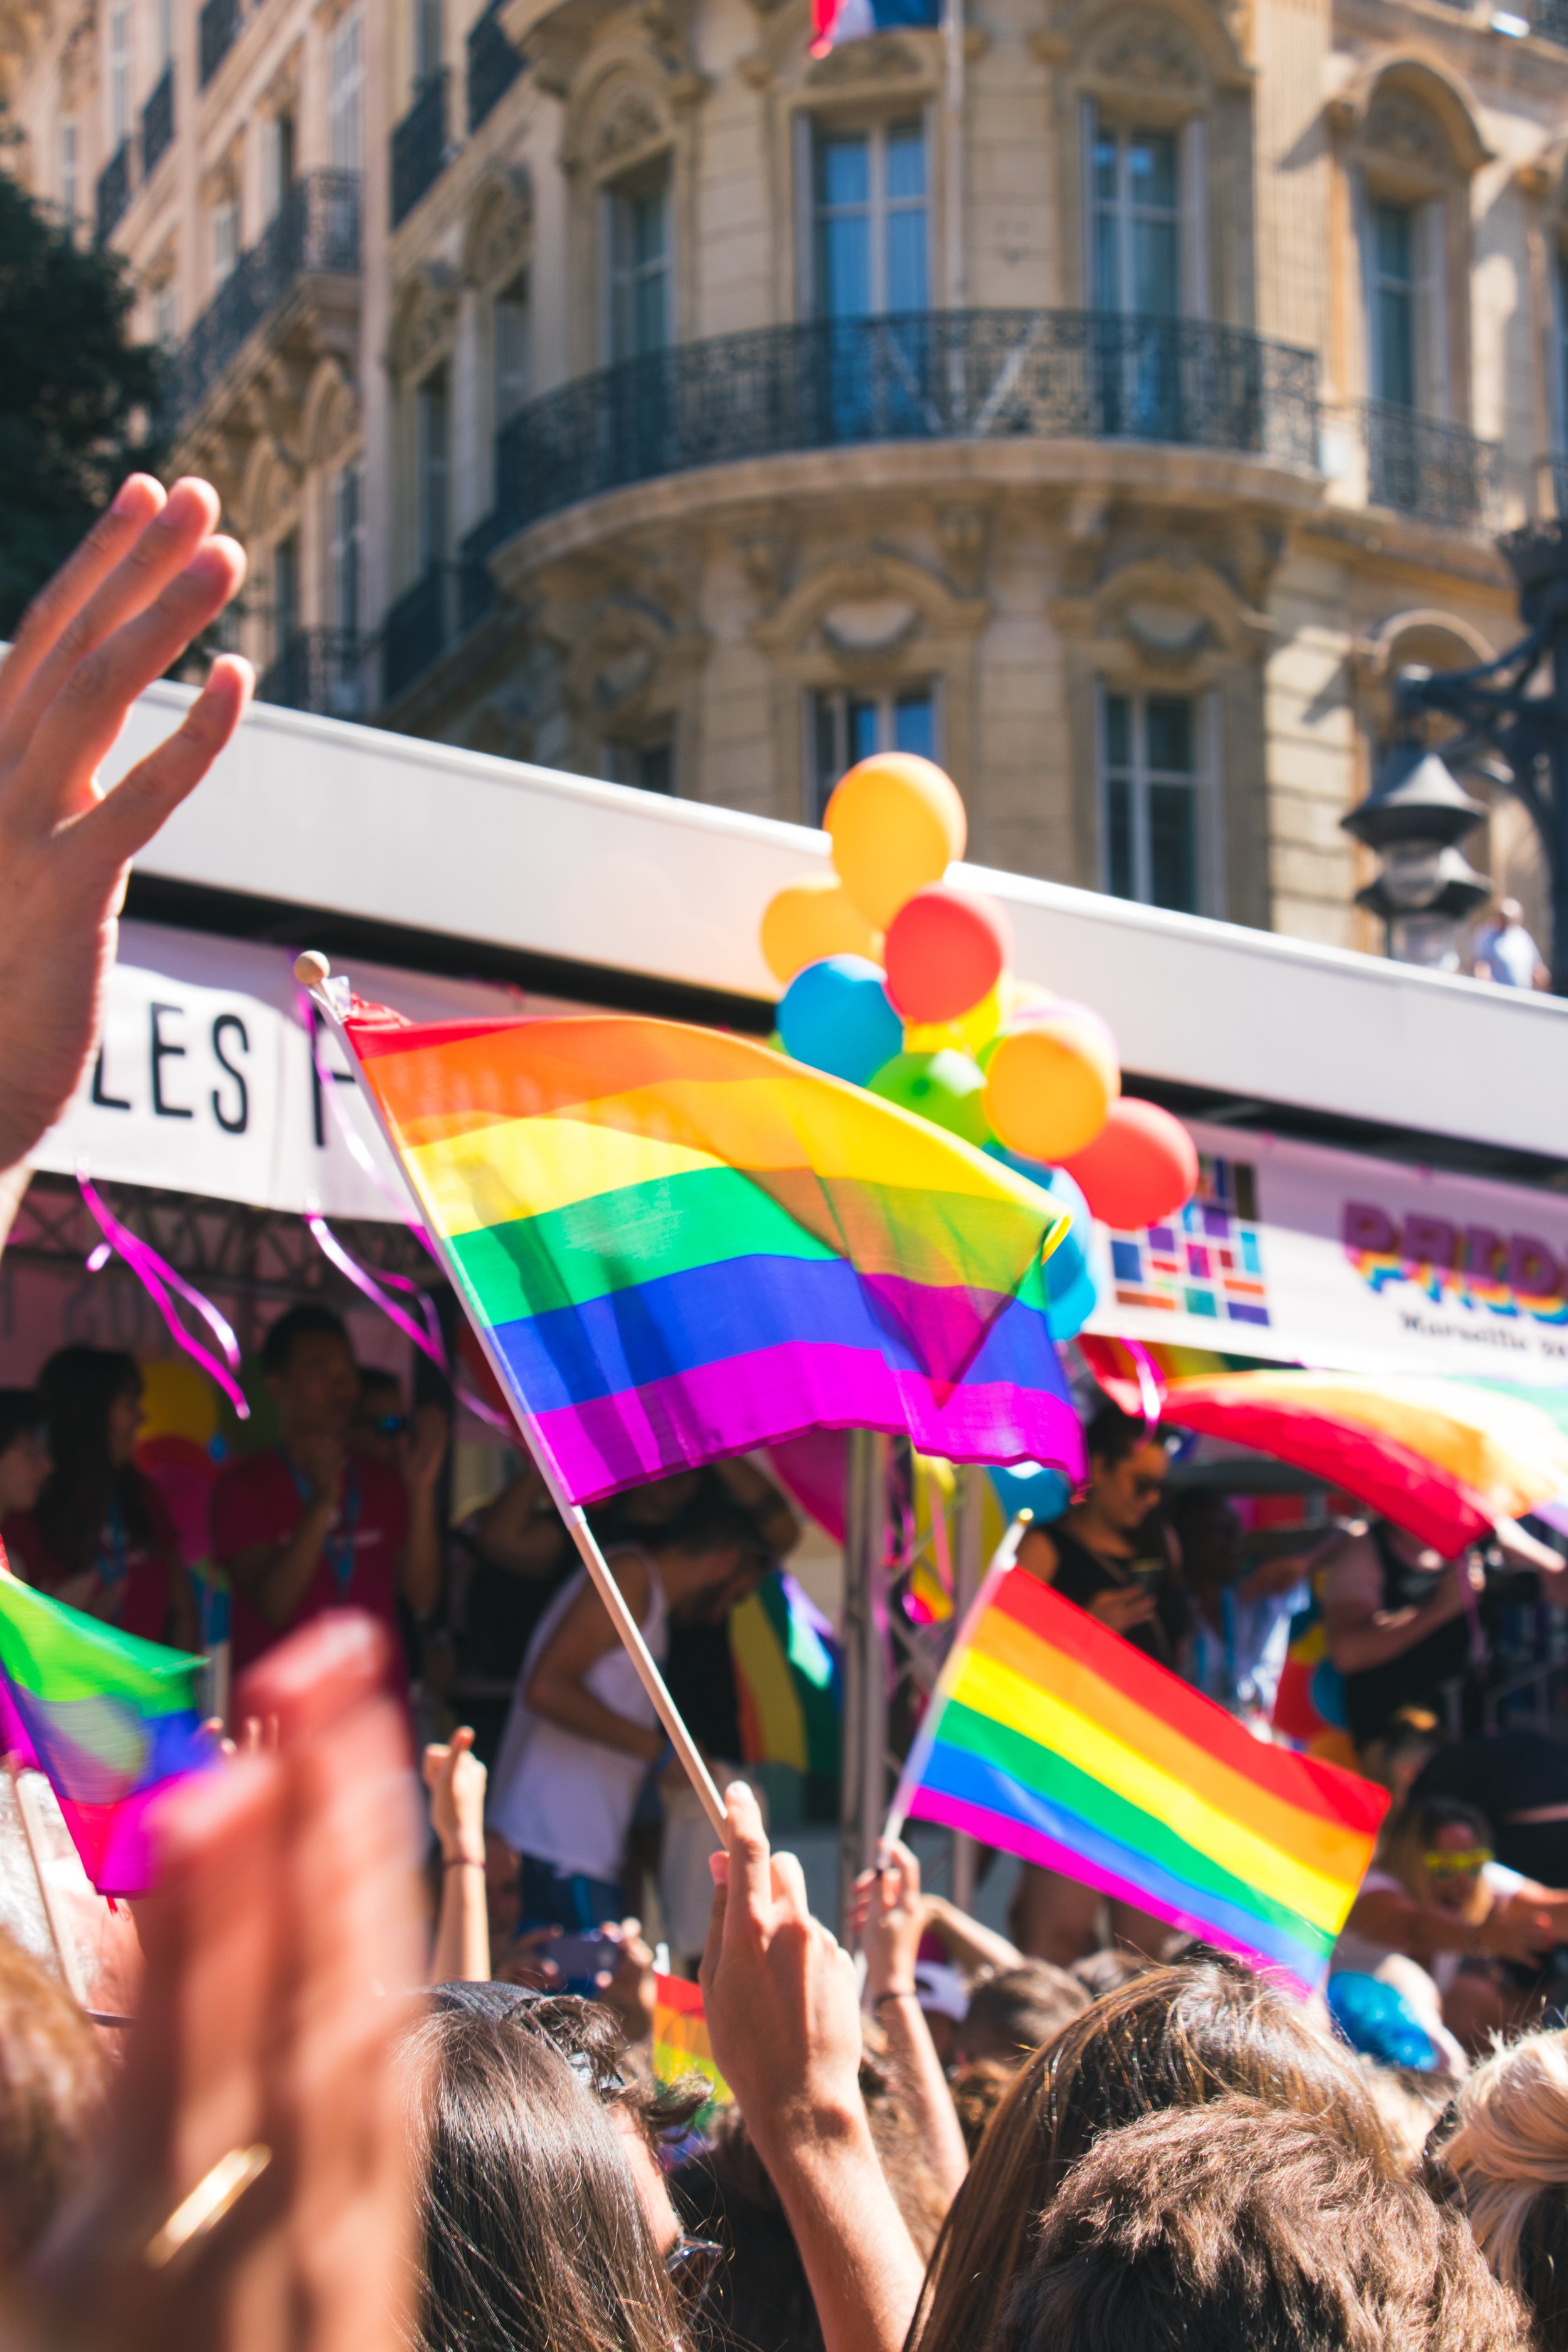 How Christ Followers Should Treat The LGBTQ+ Community